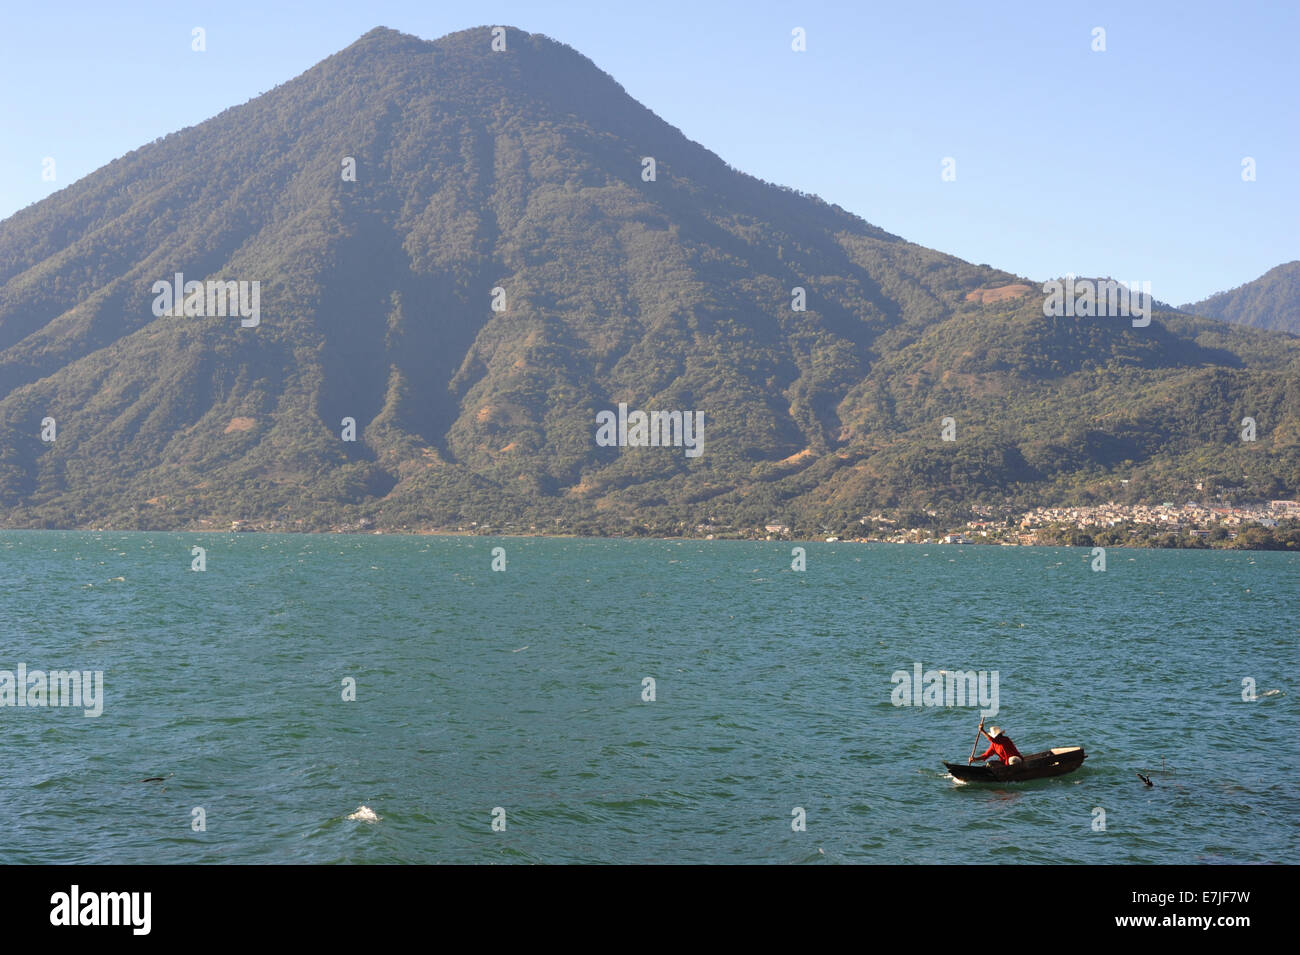 Guatemala, Central America, San Pedro, America, Atitlan, boat, central, highlands, lake, nature, scenic, volcano, volcanic, fish Stock Photo